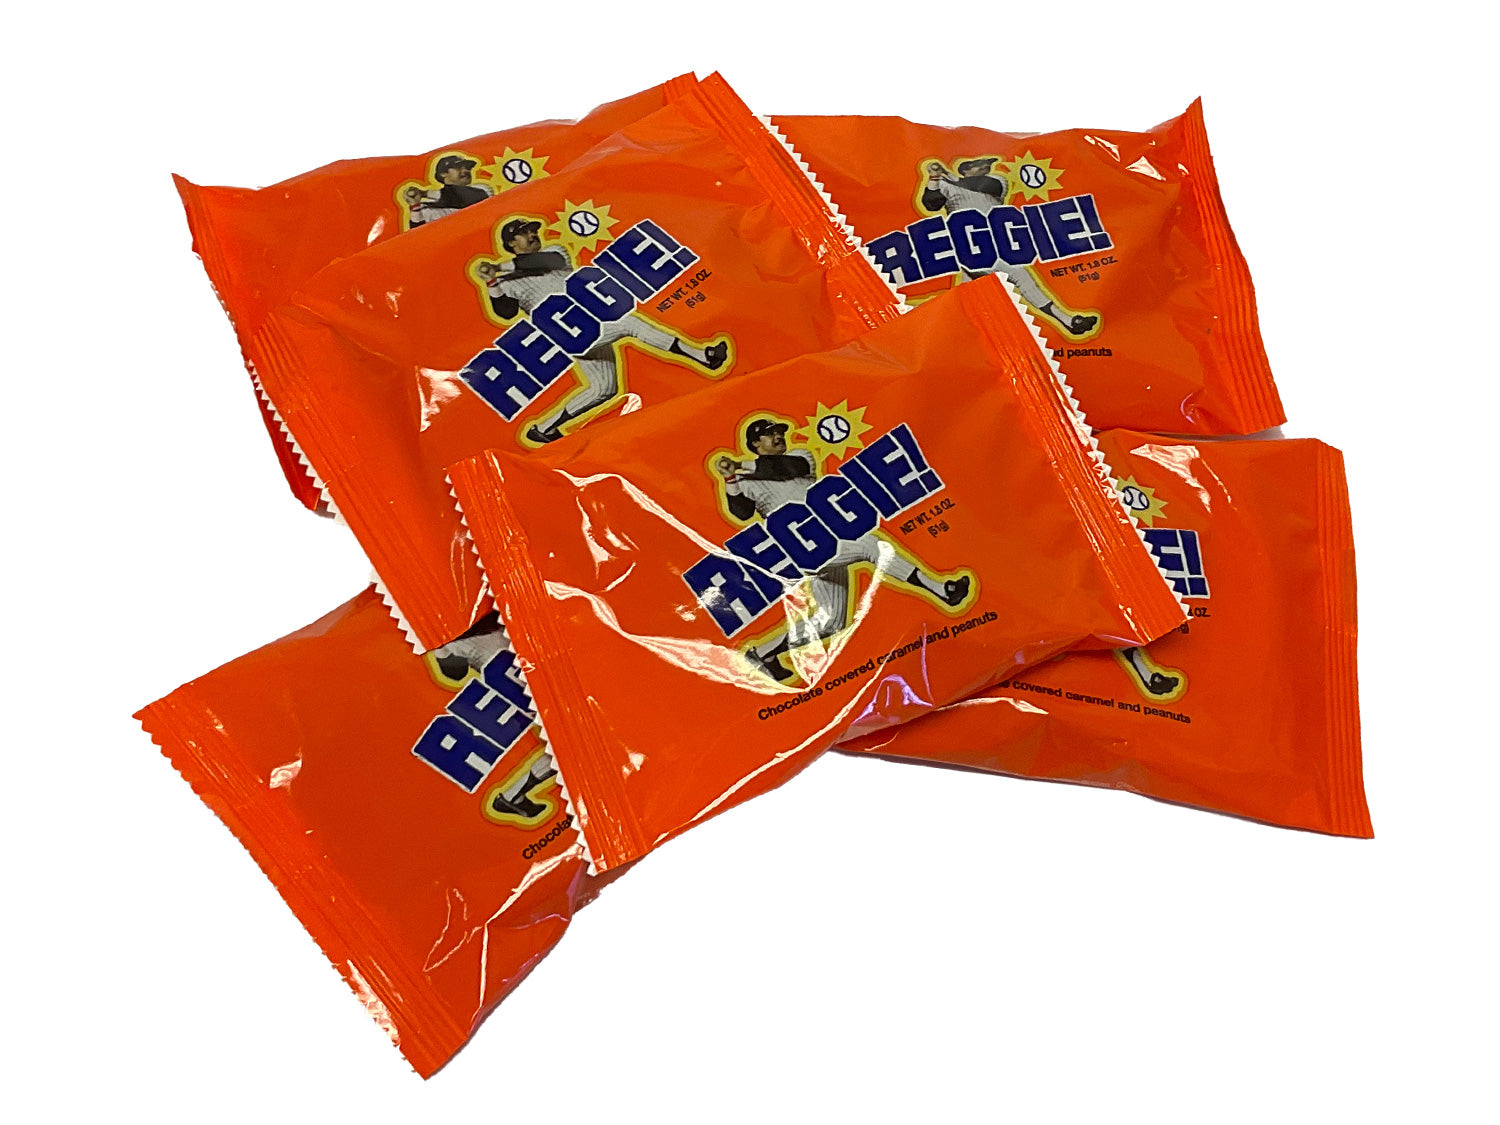 Reggie Candy Bar - 1.8 oz Bar - 6 Pack